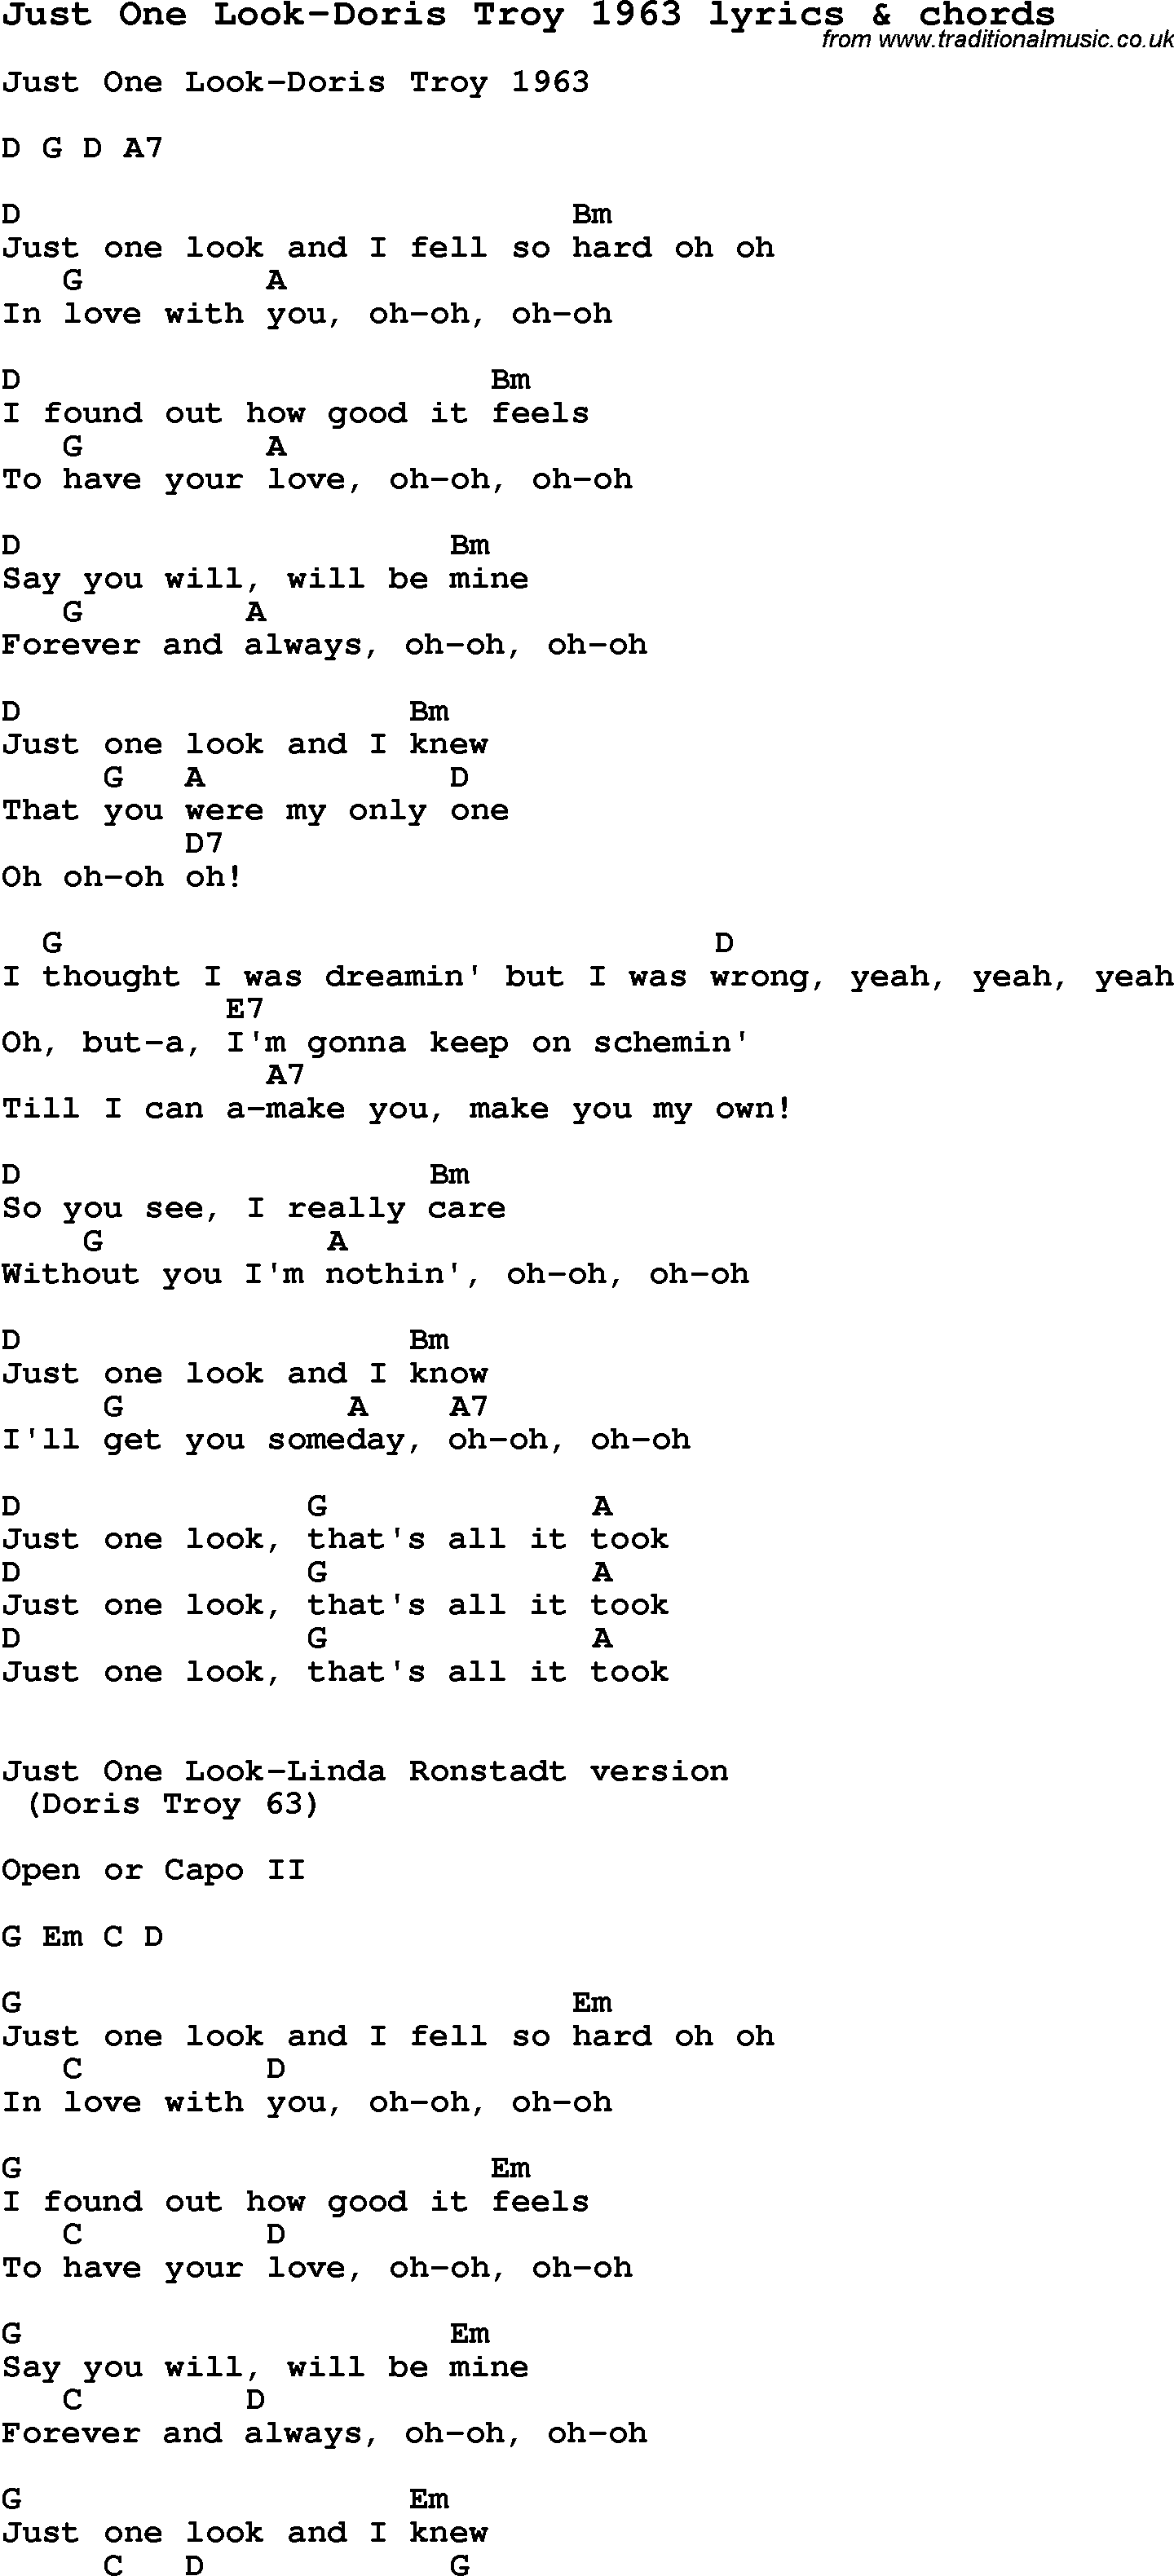 Love Song Lyrics for: Just One Look-Doris Troy 1963 with chords for Ukulele, Guitar Banjo etc.